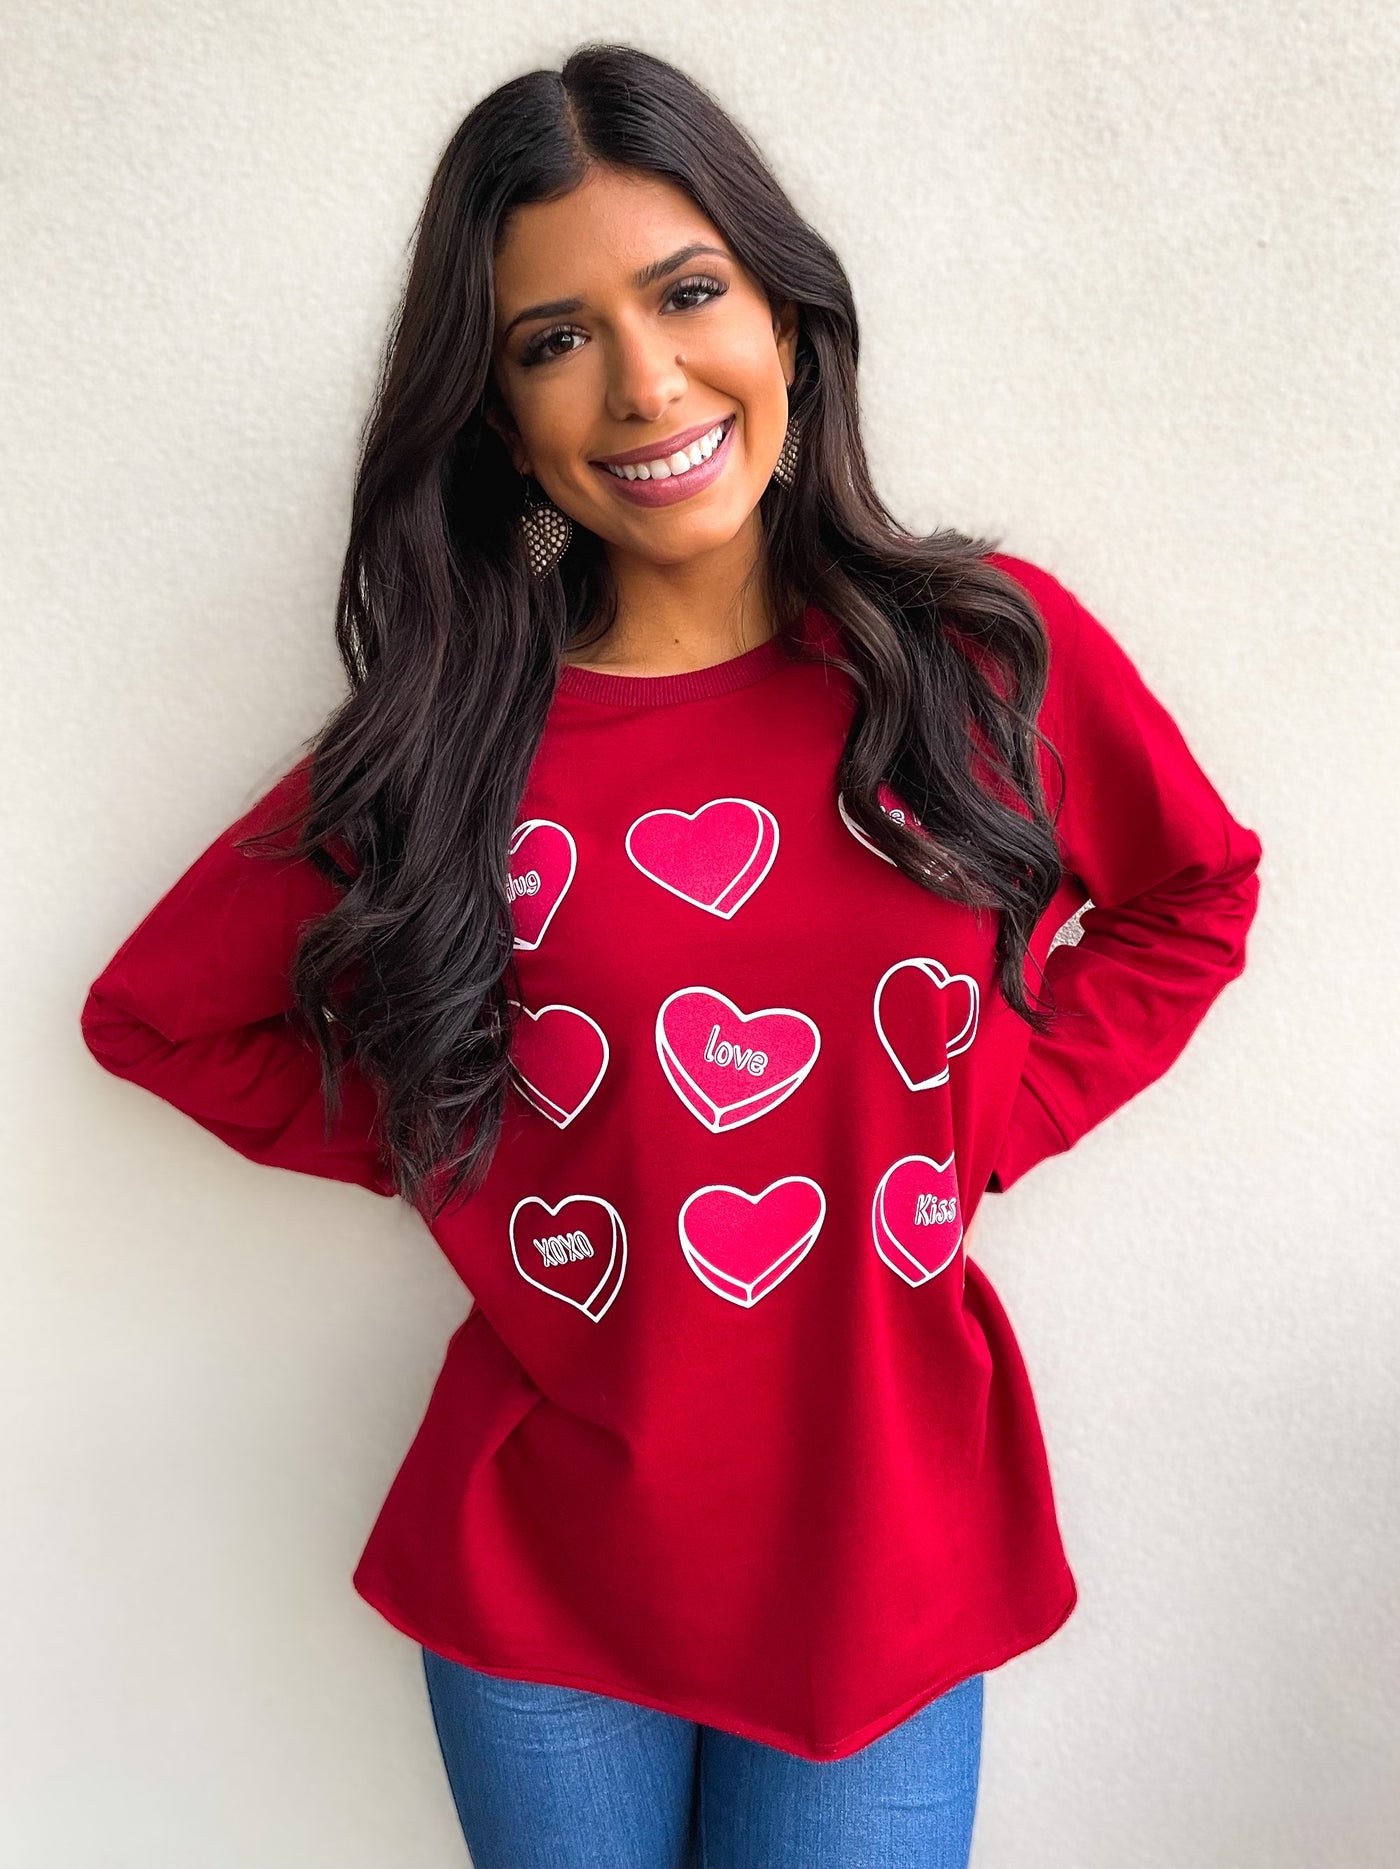 Heart Candies on Blank Red Comfort Sweatshirt